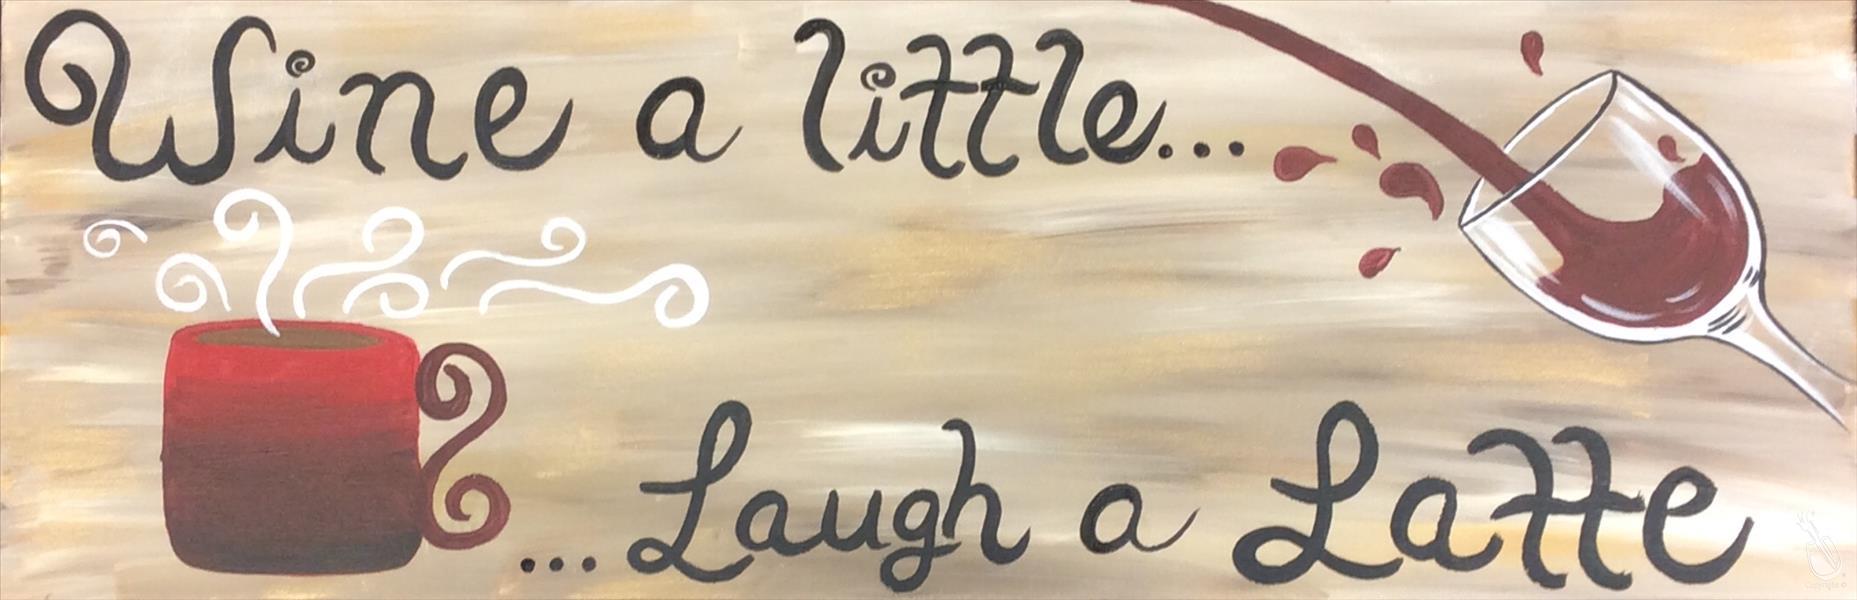 How to Paint Laugh a Latte